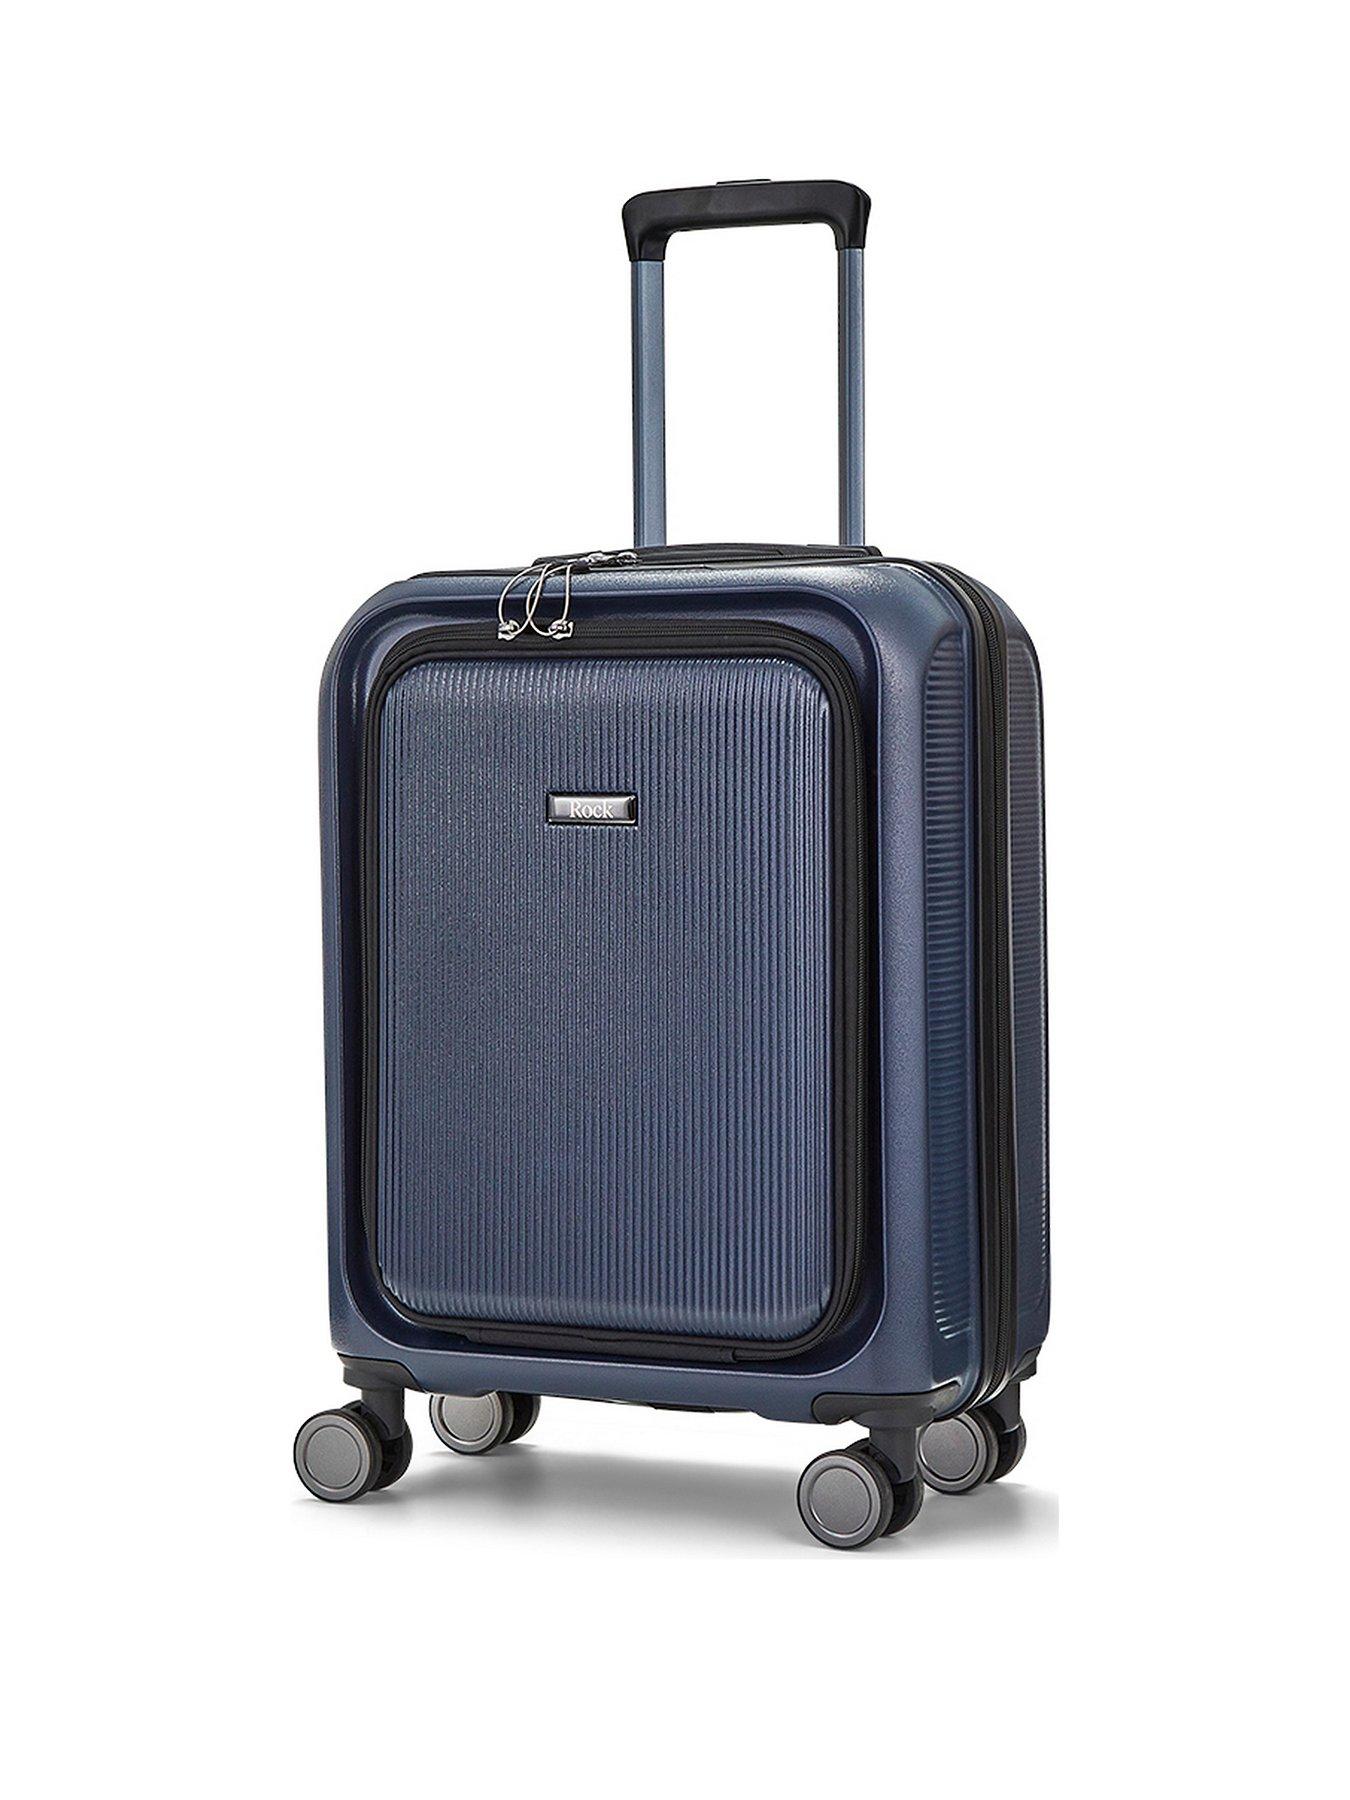 Rock Luggage Austin 8 Wheel Hardshell Pp Small Suitcase With Tsa Lock -Navy